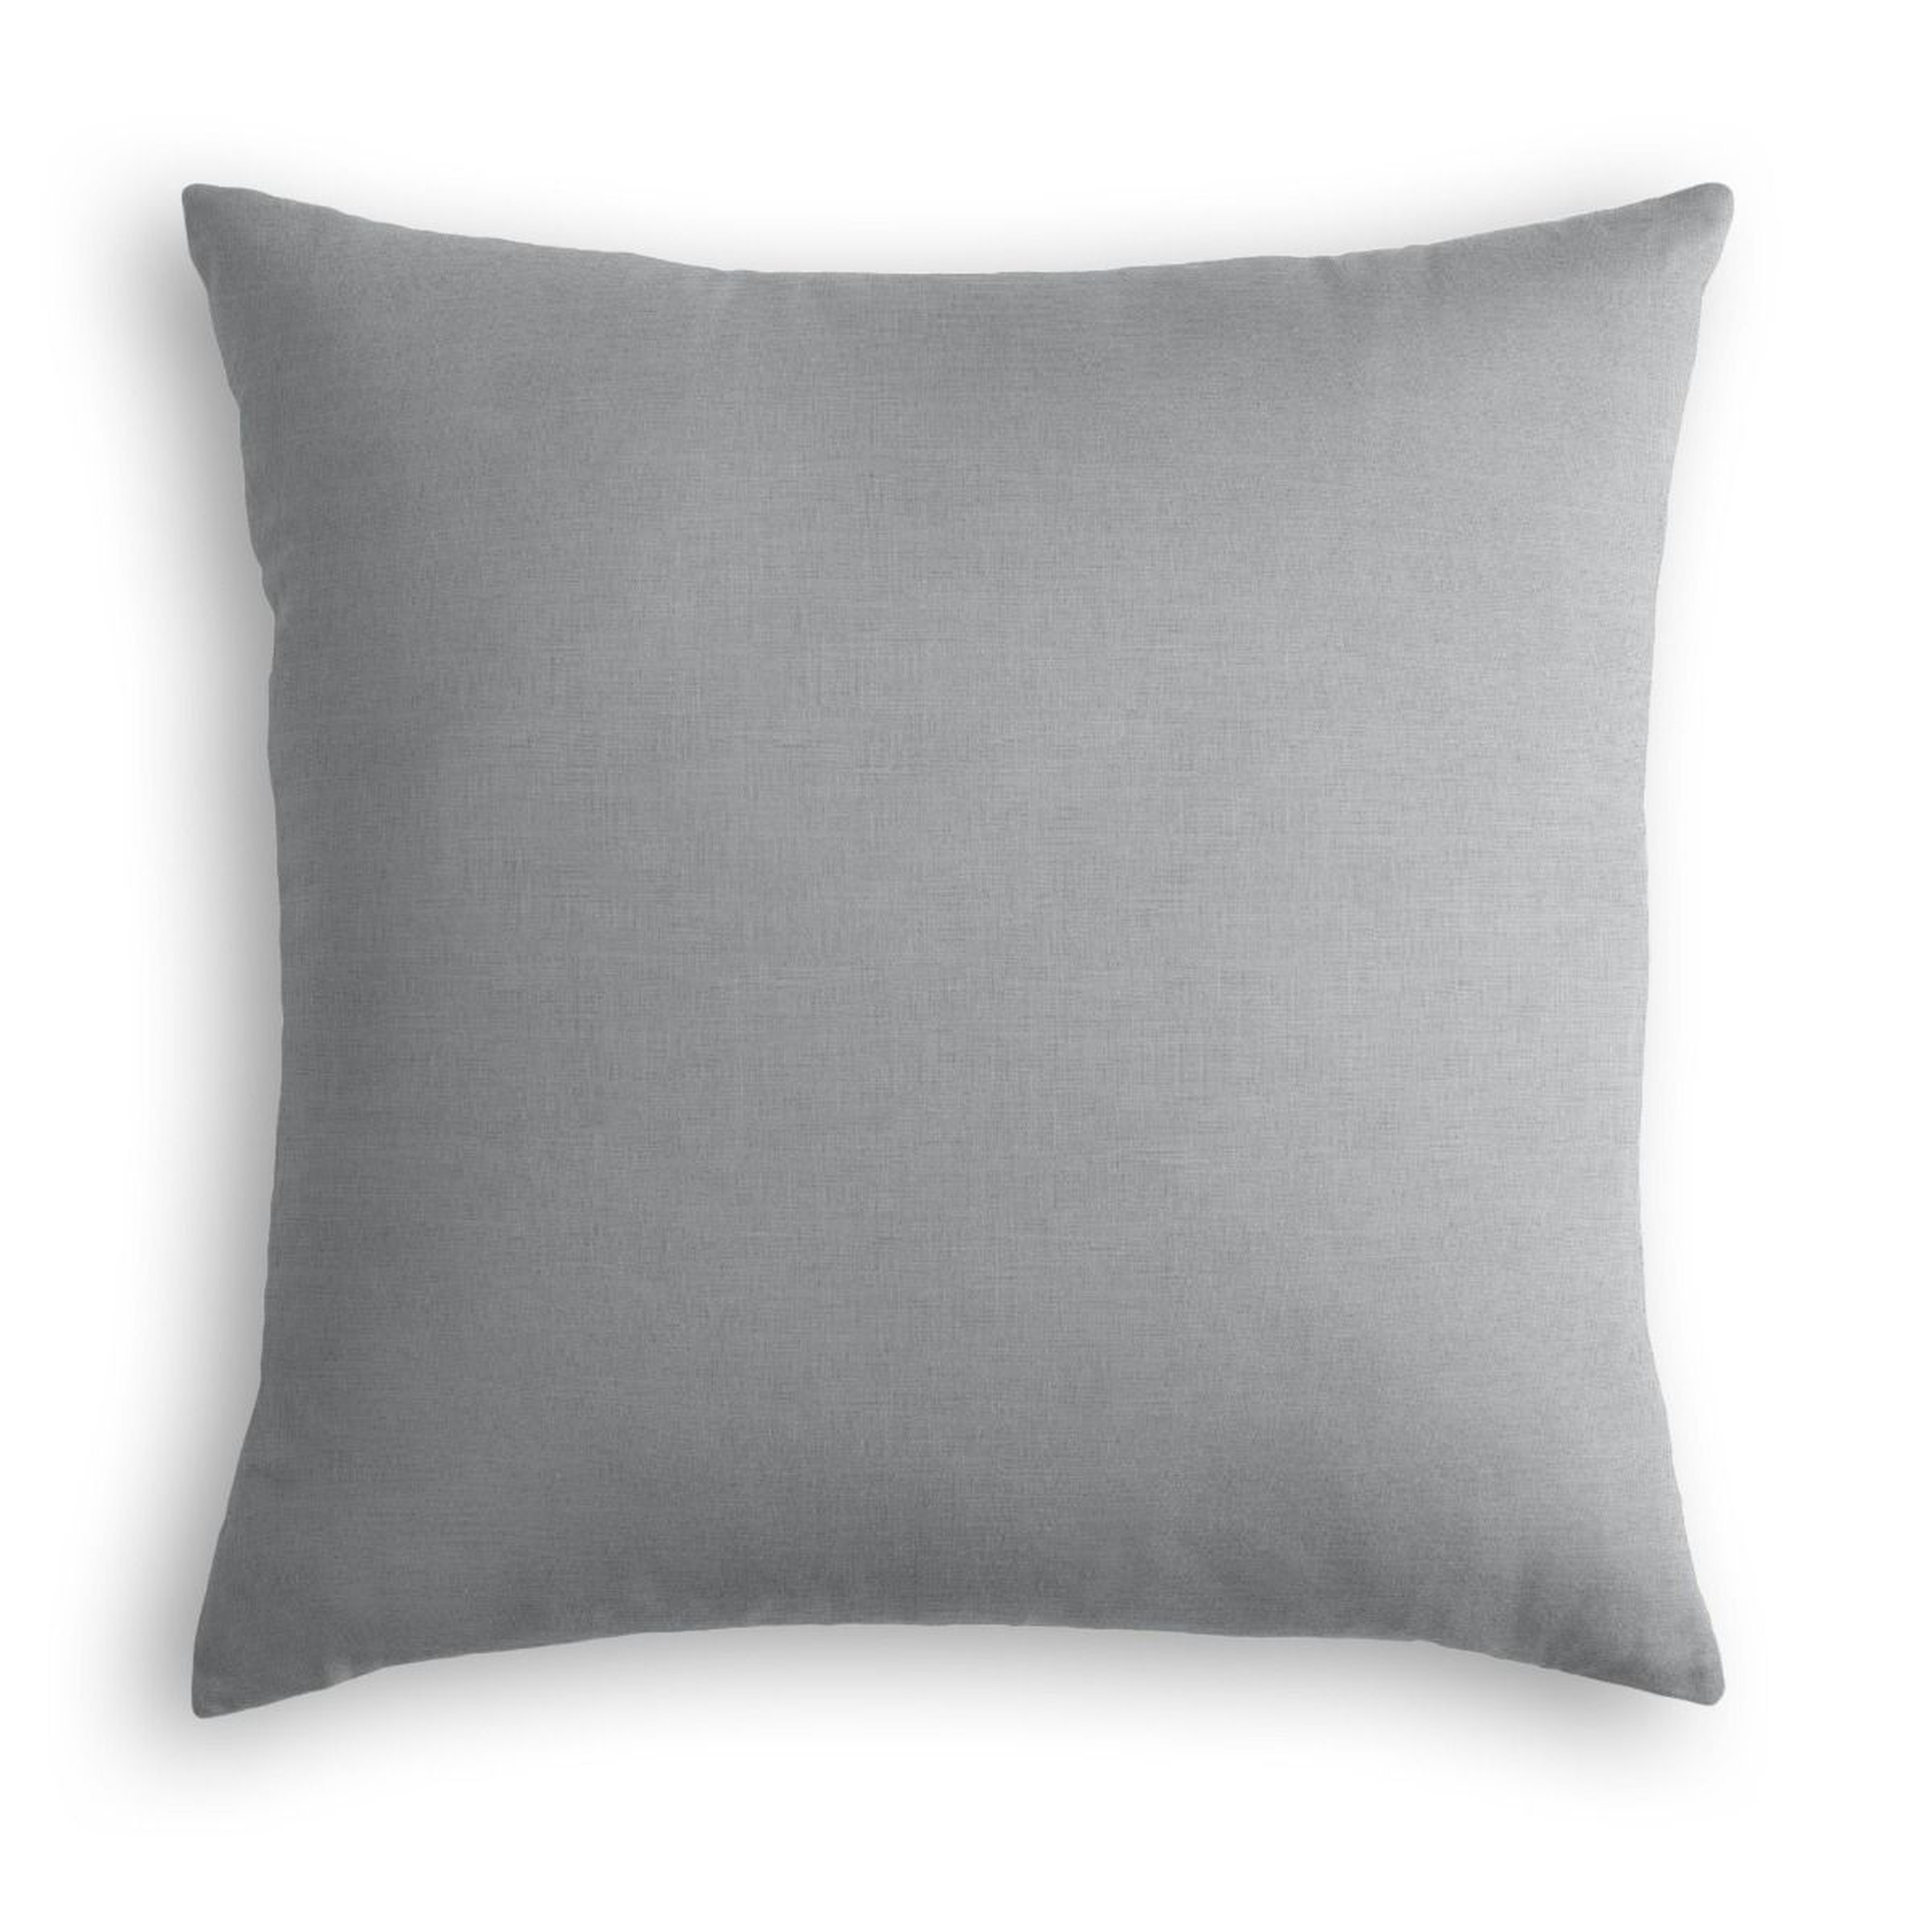 Classic Linen Pillow, Cement, 20" x 20" - Havenly Essentials